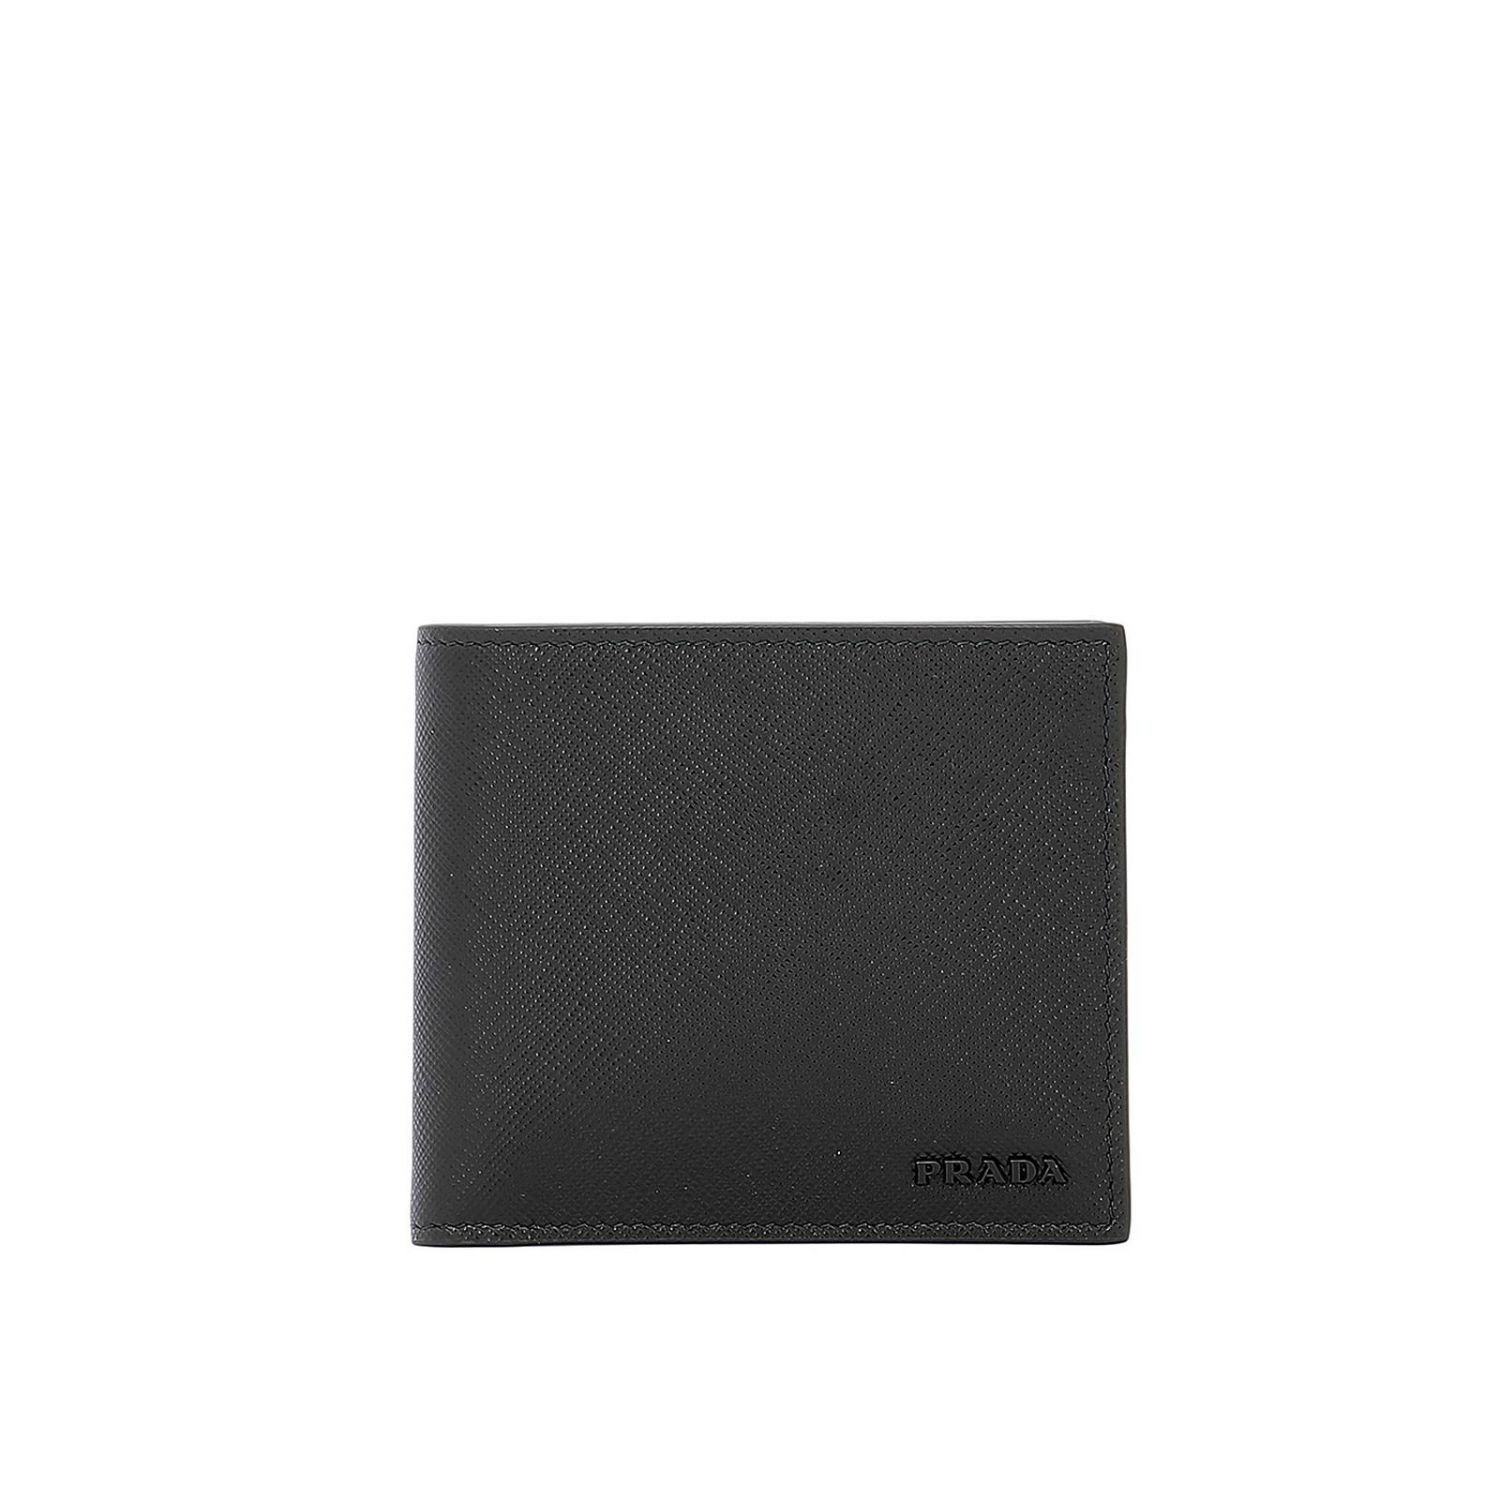 PRADA: wallet for man - Black 1 | Prada wallet 2MO513 ZLP online on ...